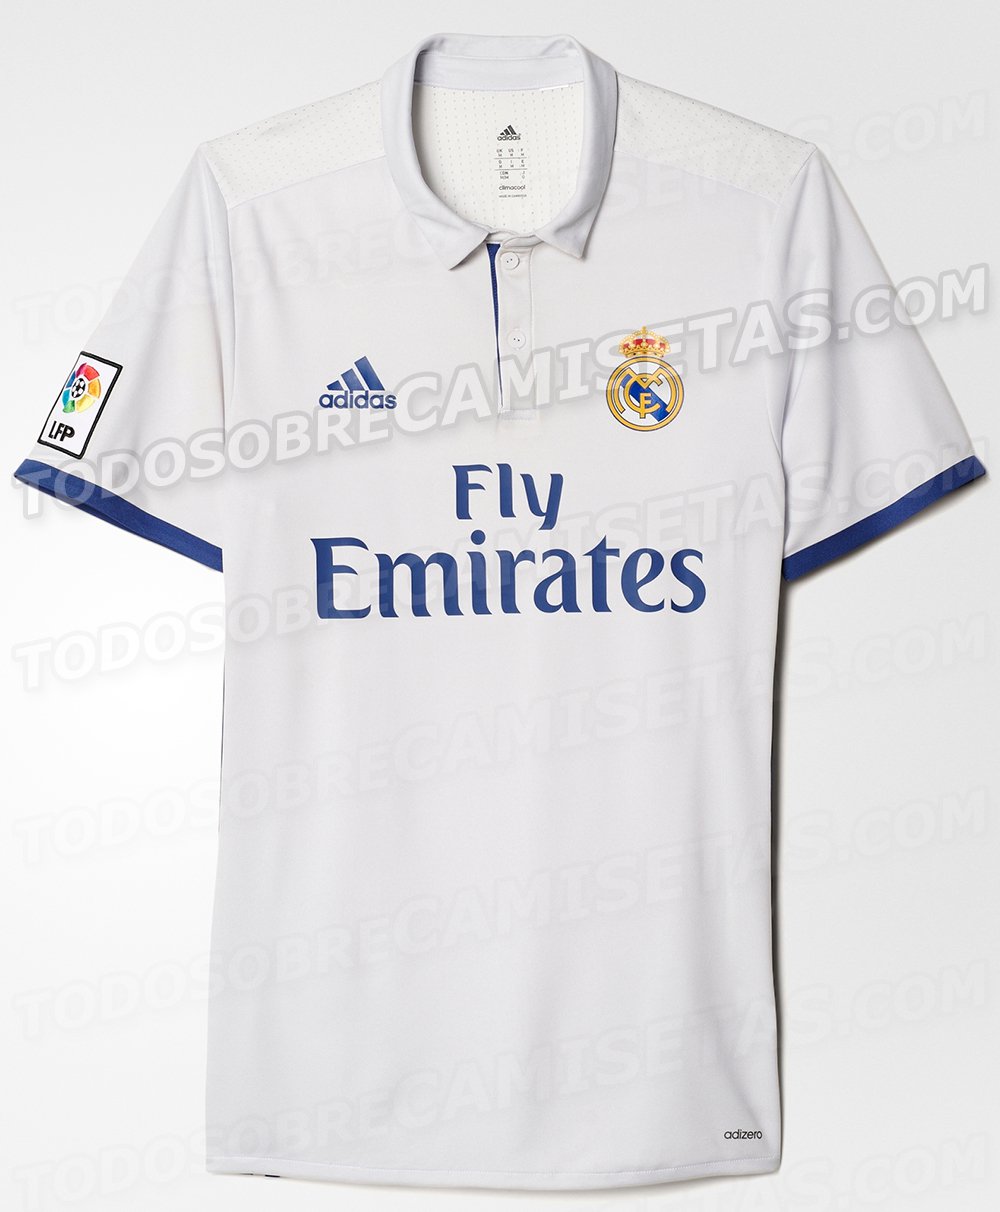 Nueva camiseta del Real Madrid